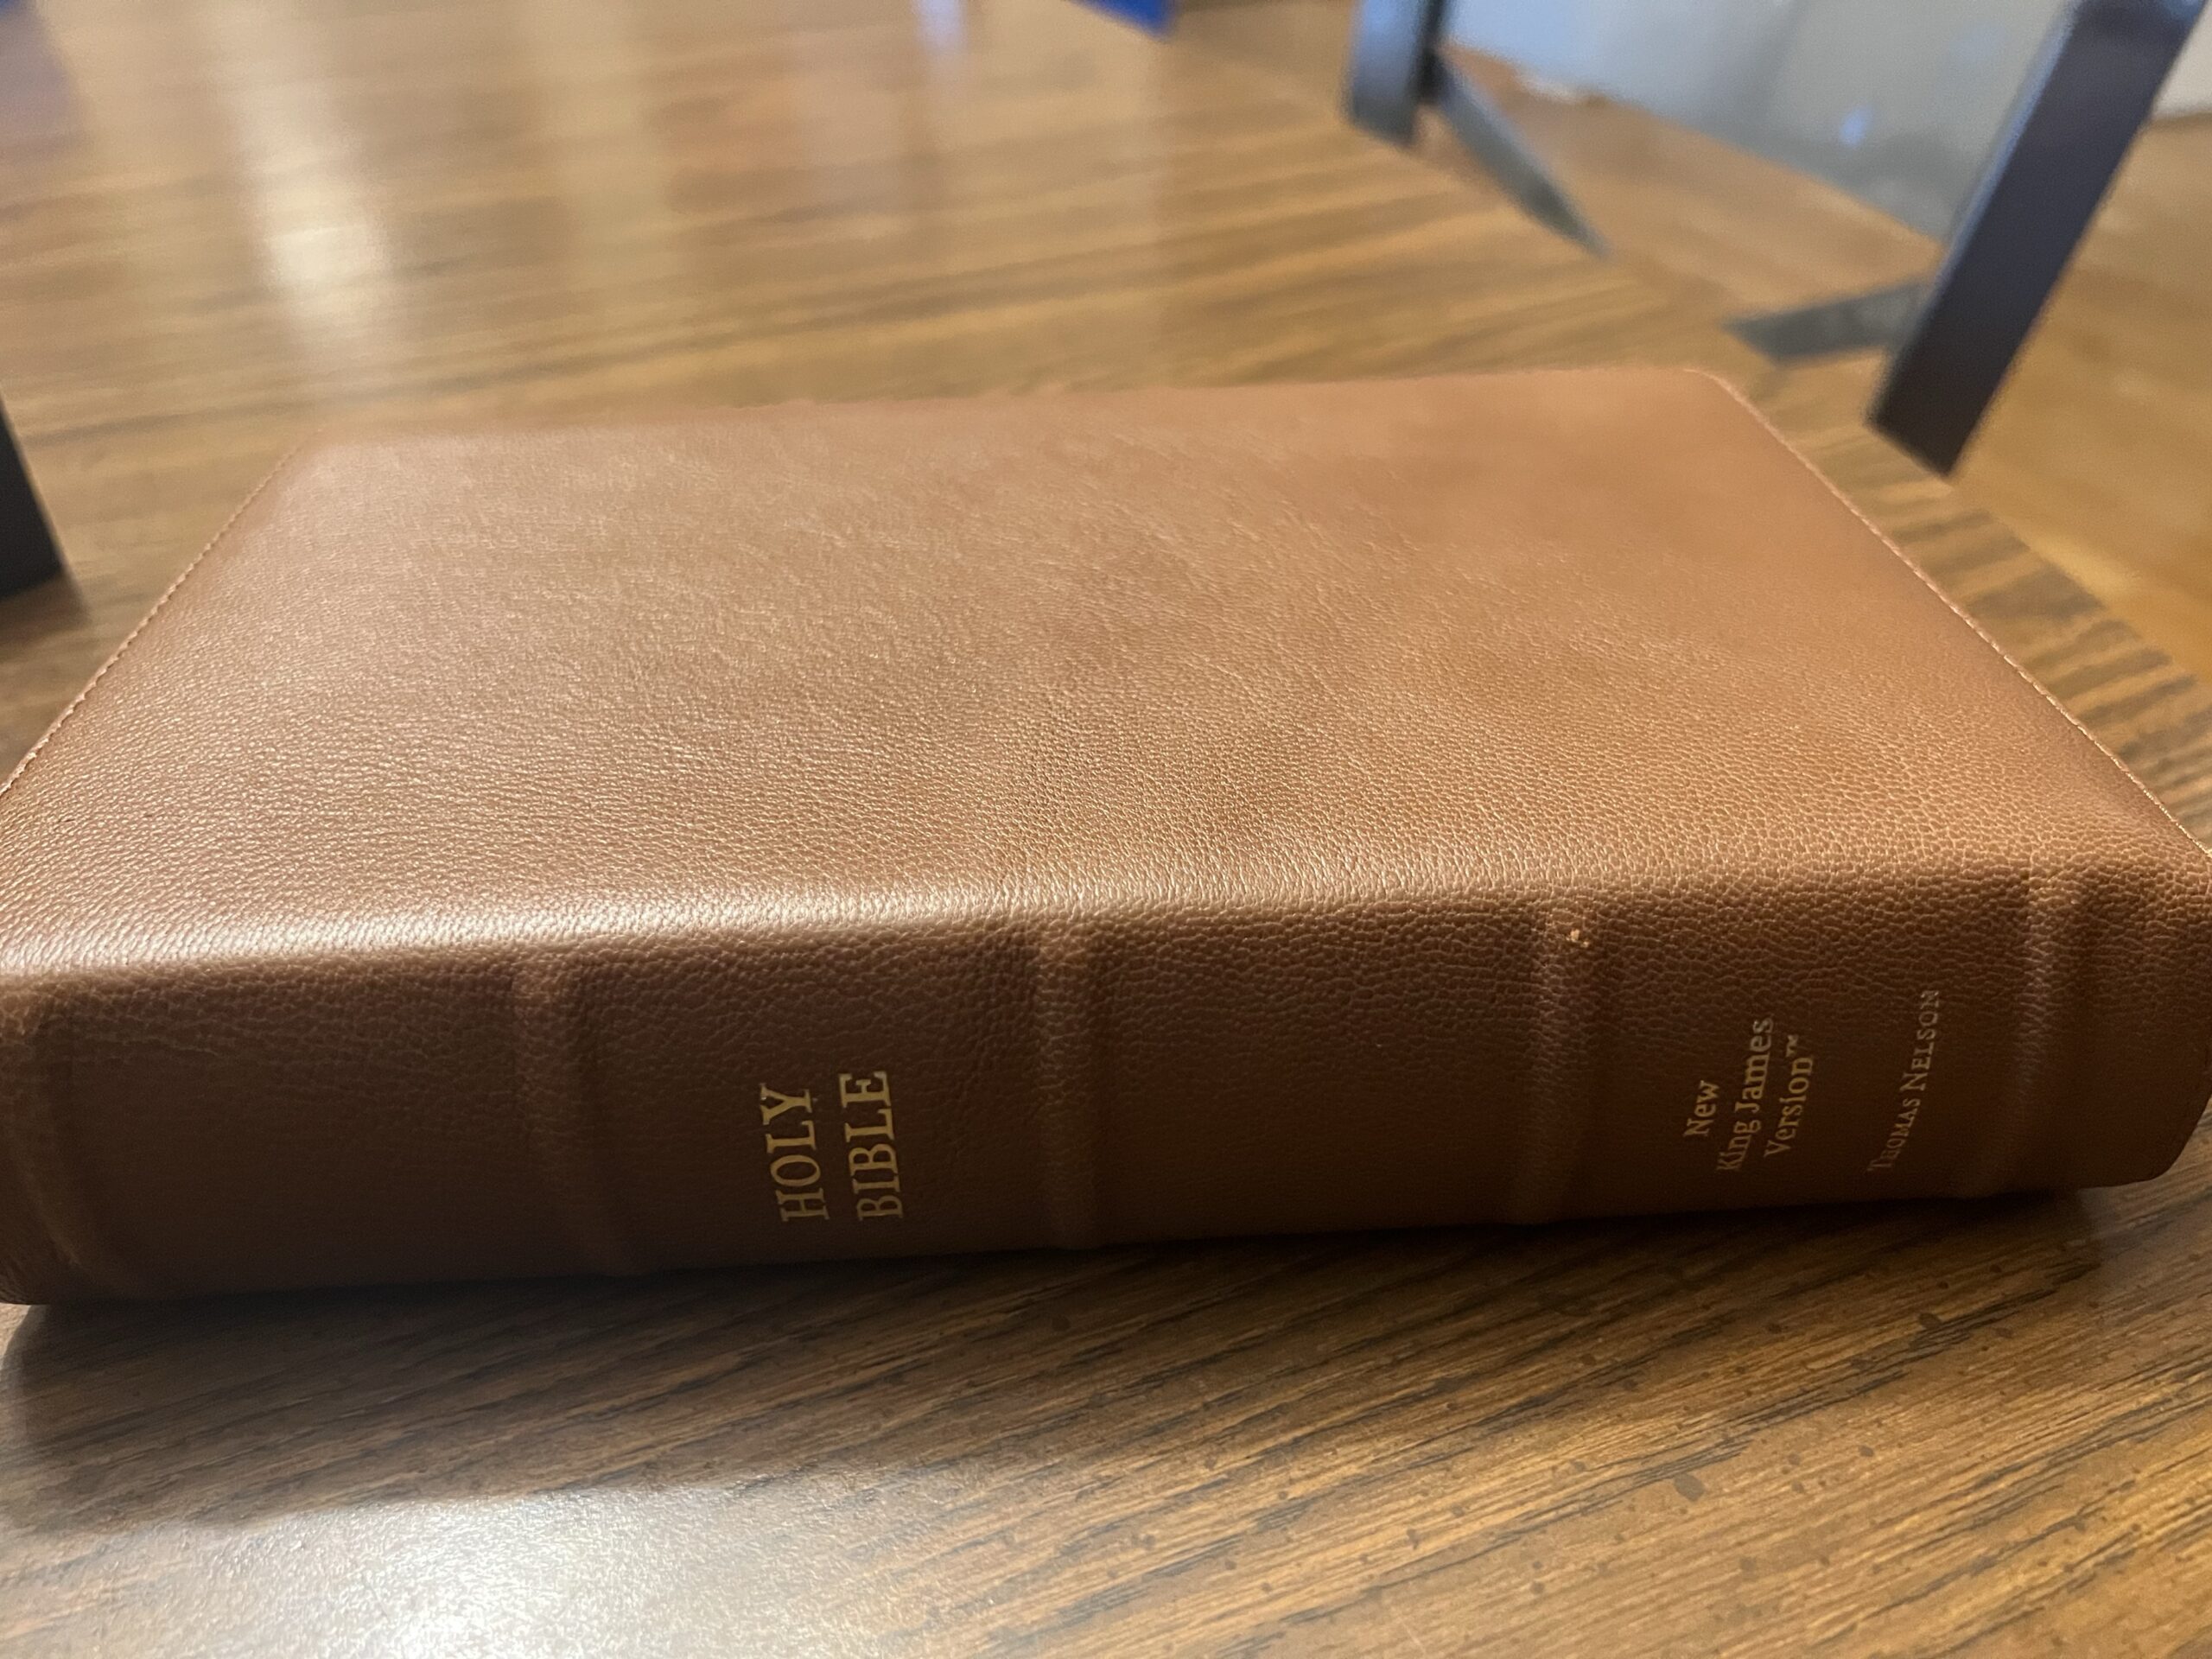 NKJV Large Print, End of Verse Reference Bible